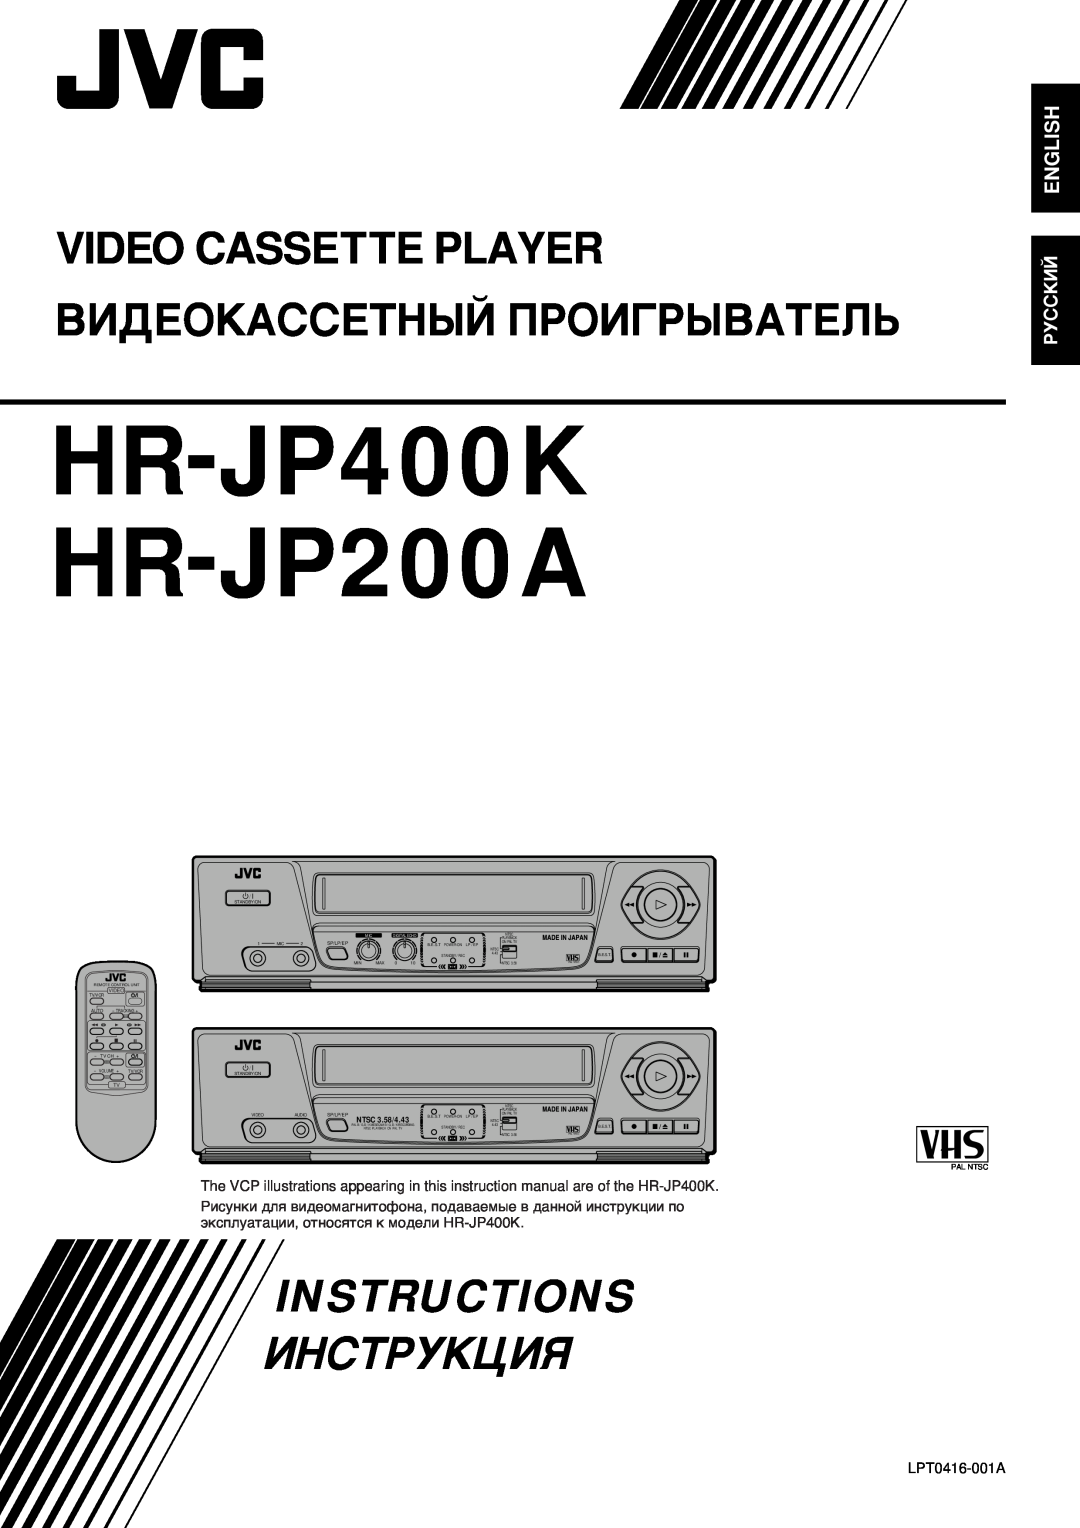 JVC instruction manual Video Cassette Player, HR-JP400K HR-JP200A, Instructions, English, Pal Ntsc, NTSC 3.58/4.43 